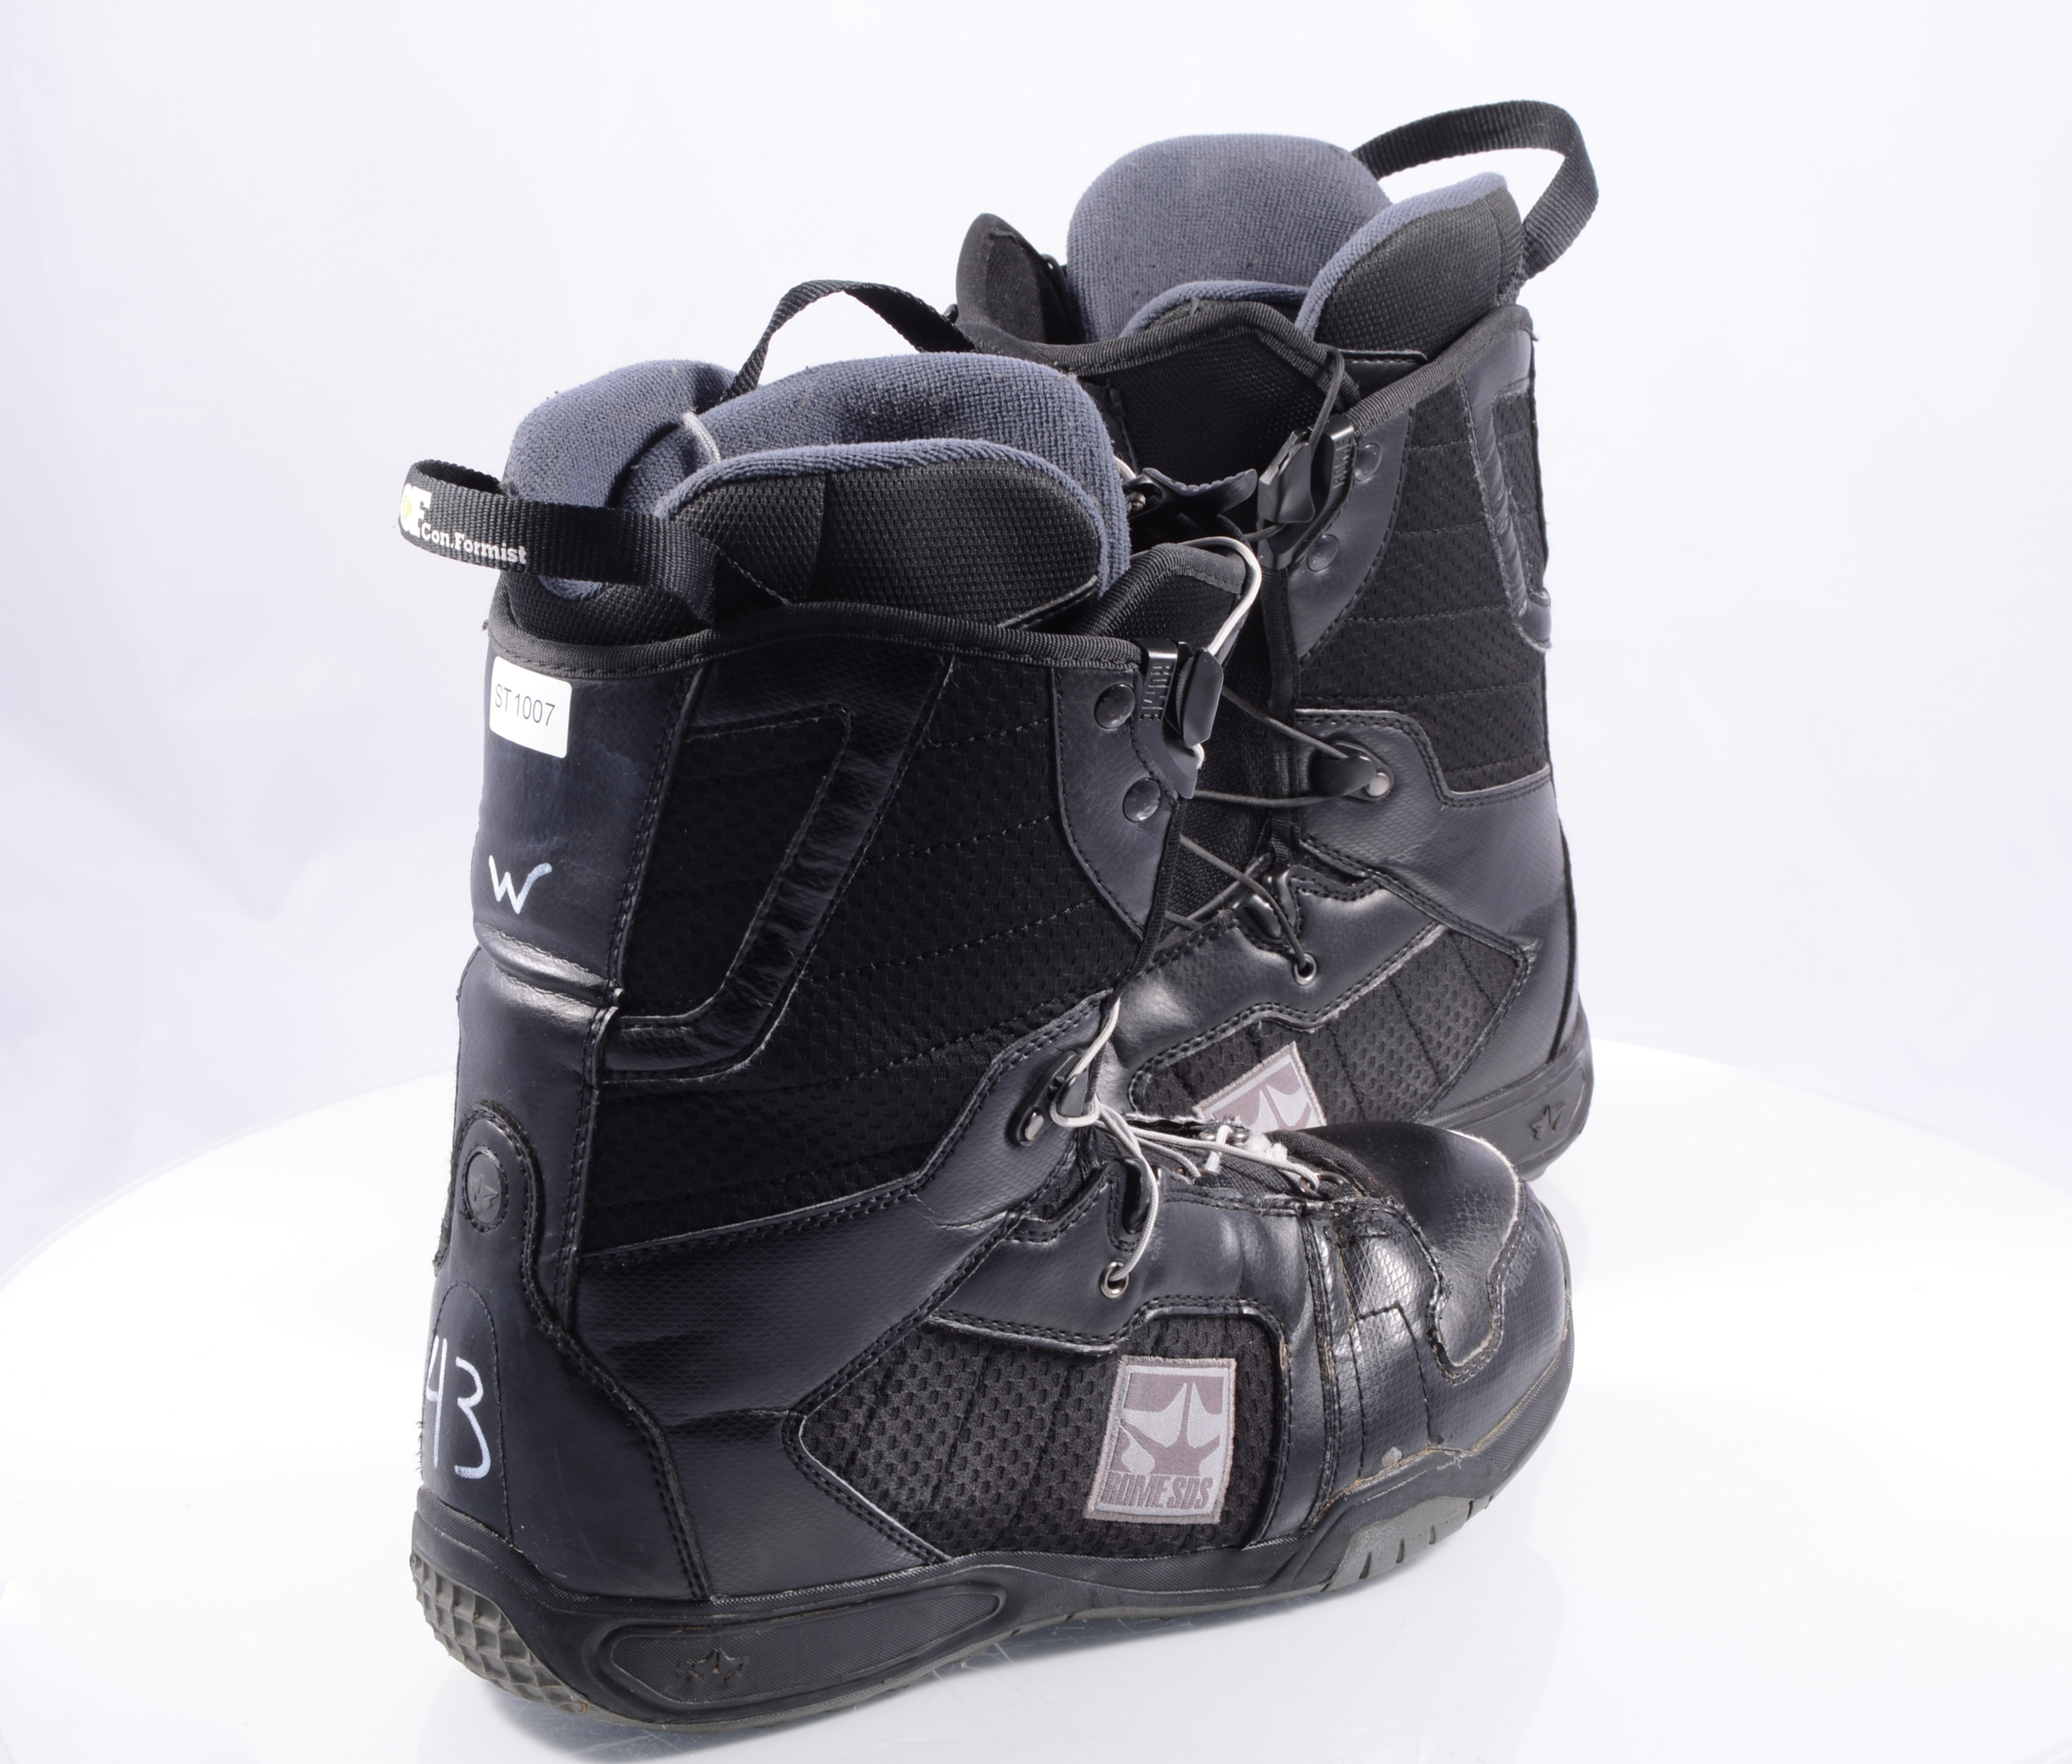 Skur sortie efterklang snowboard boots ROME SDS SMITH PUREFLEX BLACK - Mardosport.com